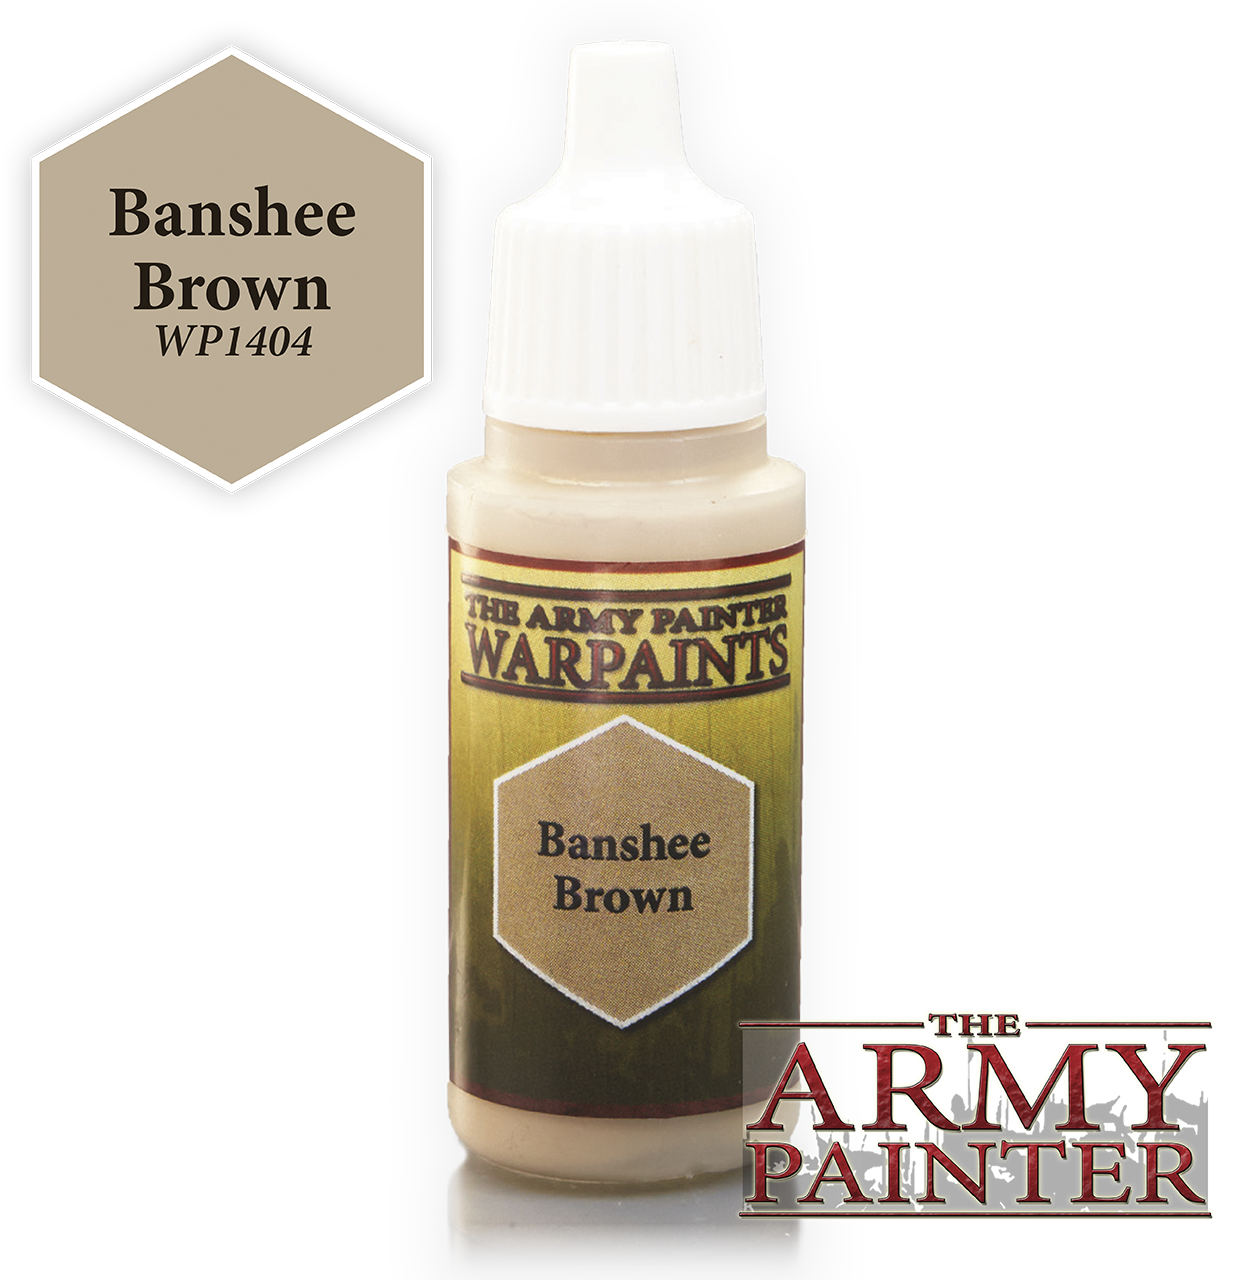 Banshee Brown - Army Painter Warpaints